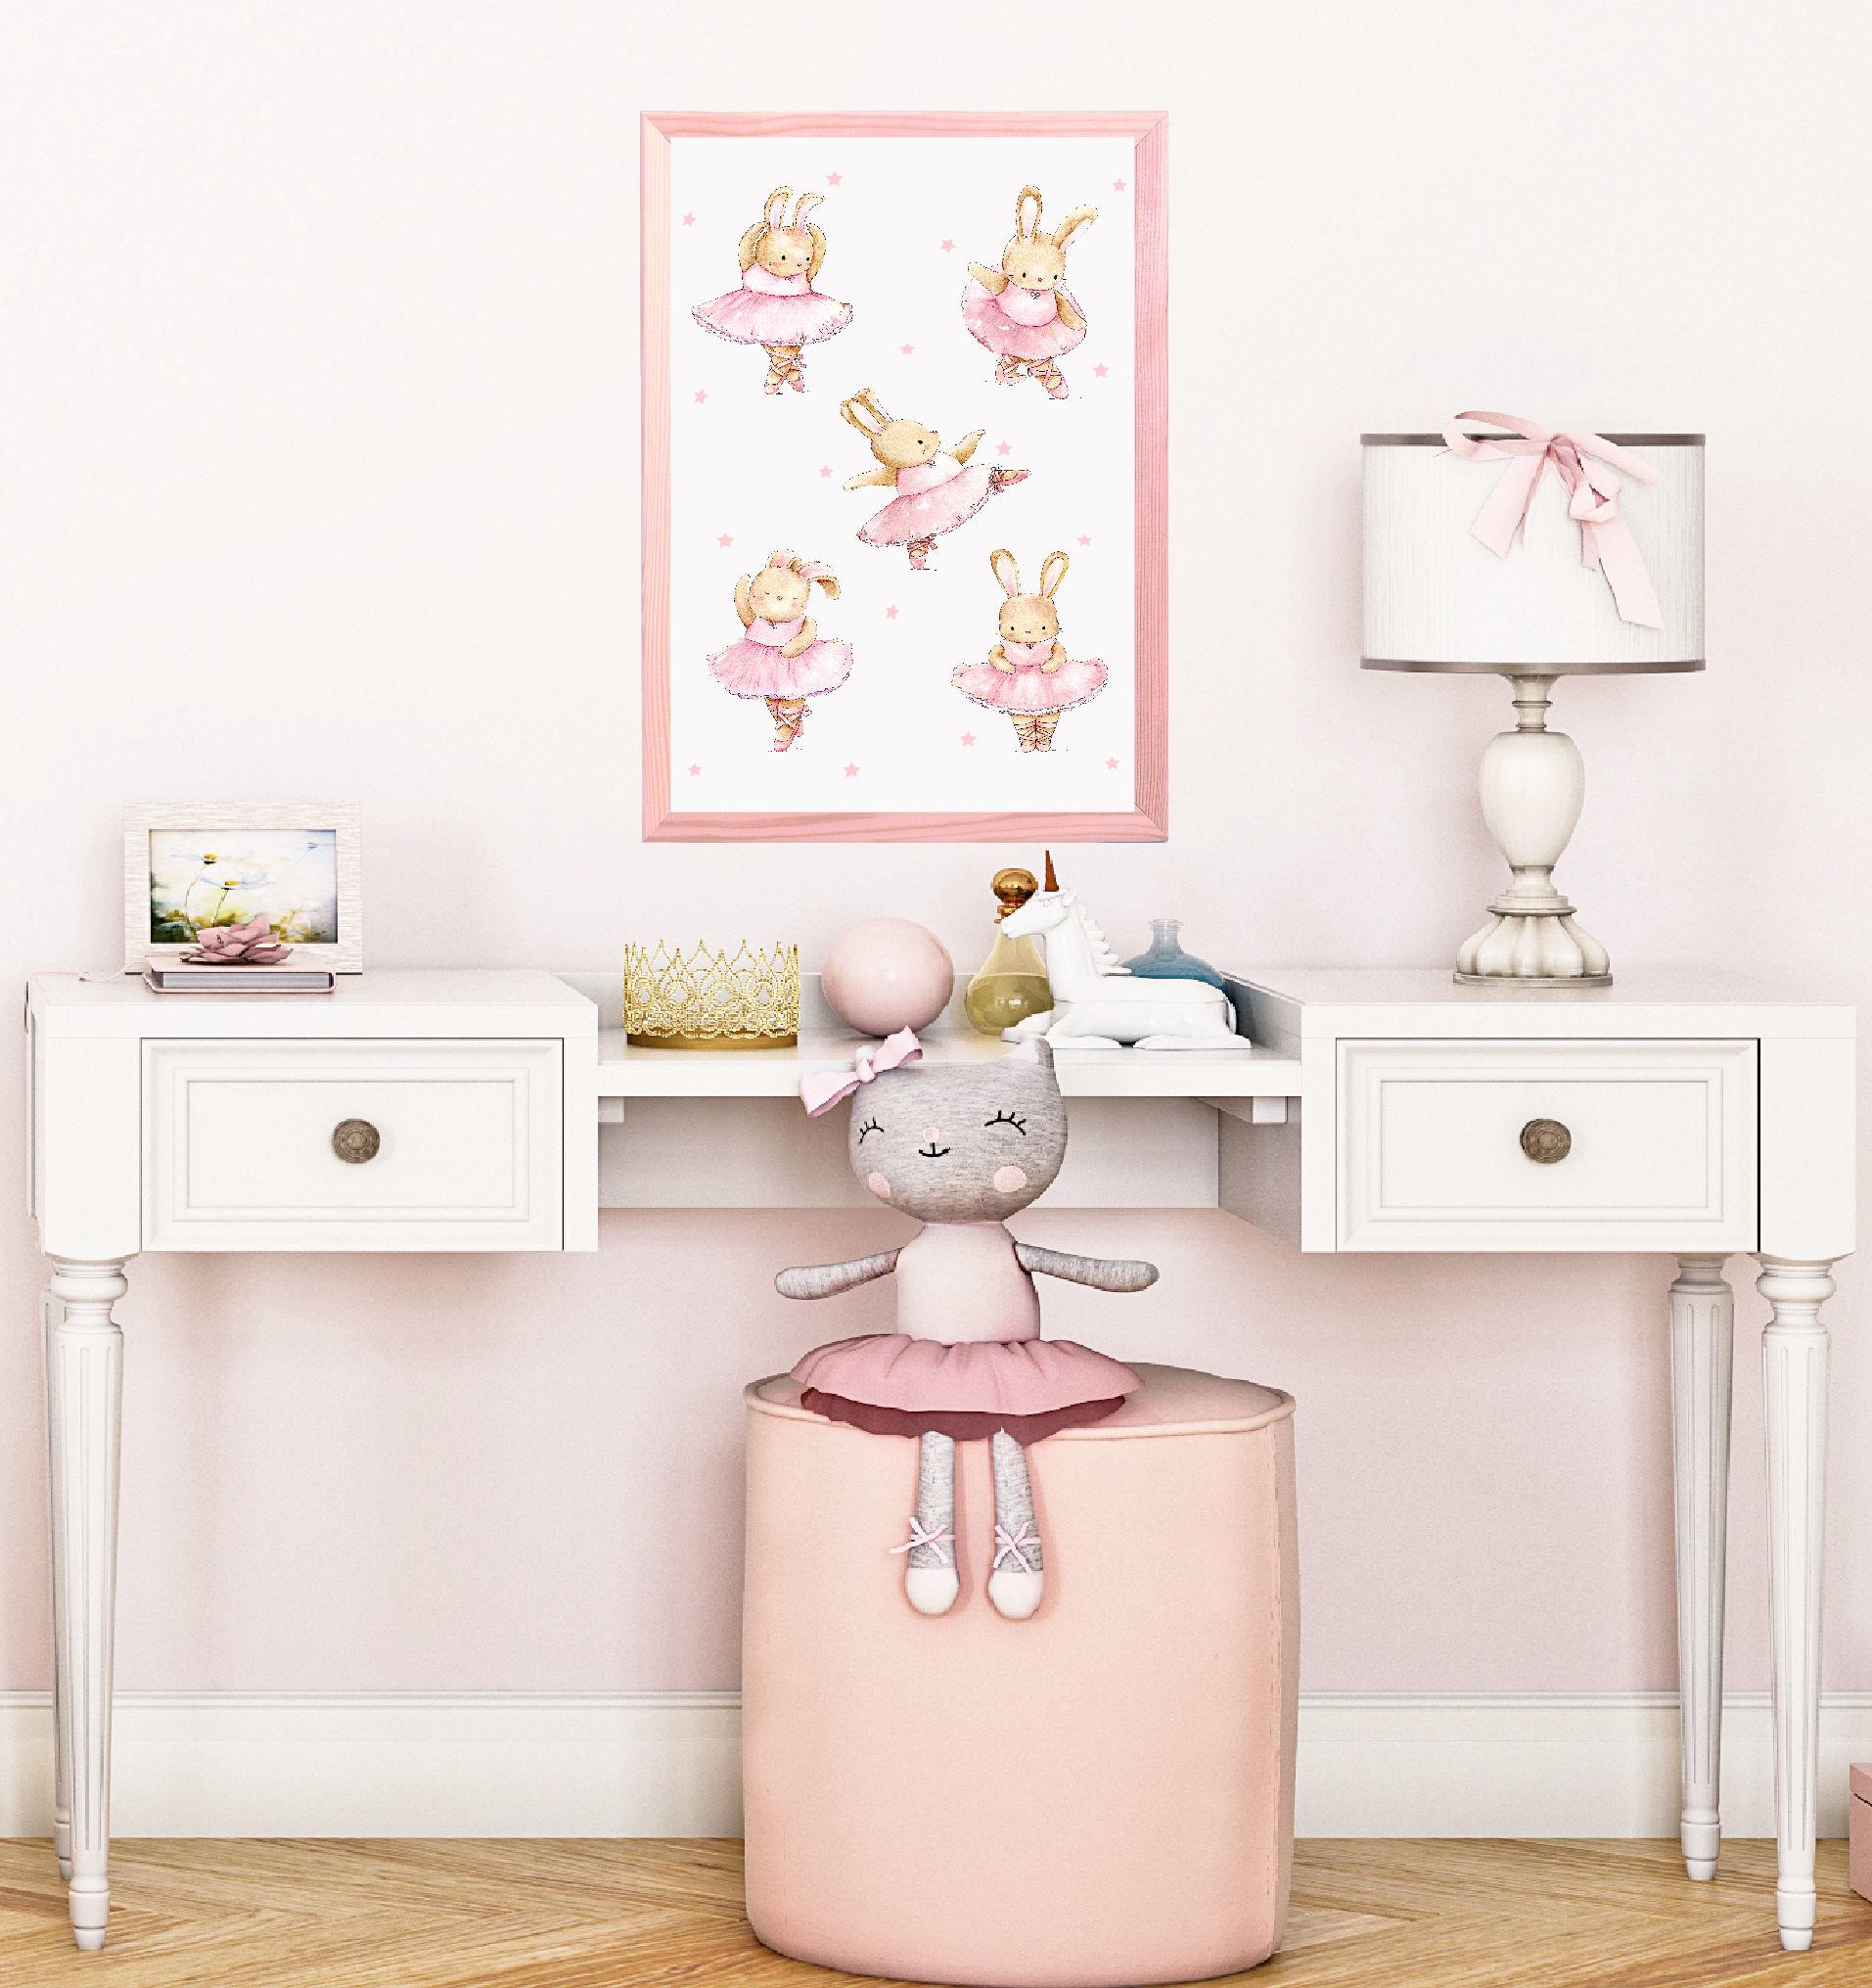 Pink Ballerina Bunnies Watercolour Print,Perfect Gift for a Ballerina,Dancer, or Ballet Themed Bedroom